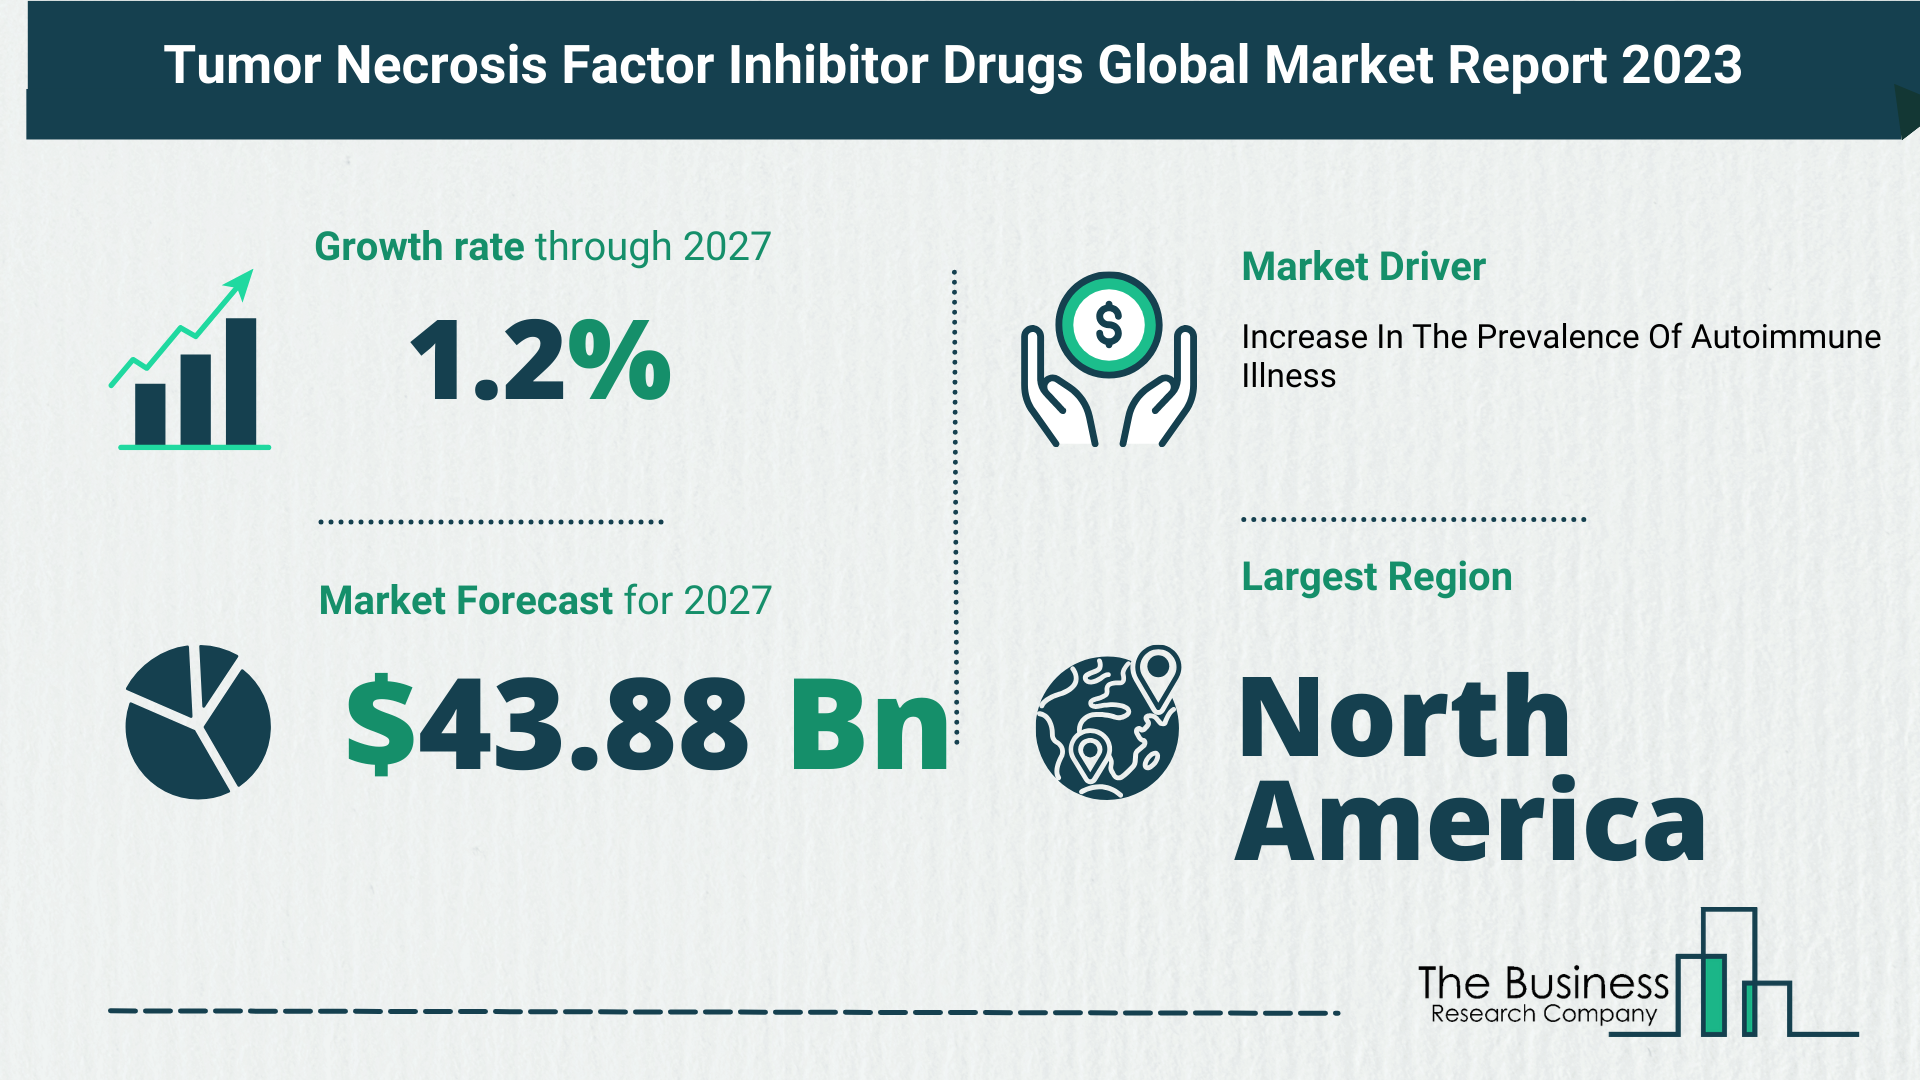 Global Tumor Necrosis Factor Inhibitor Drugs Market